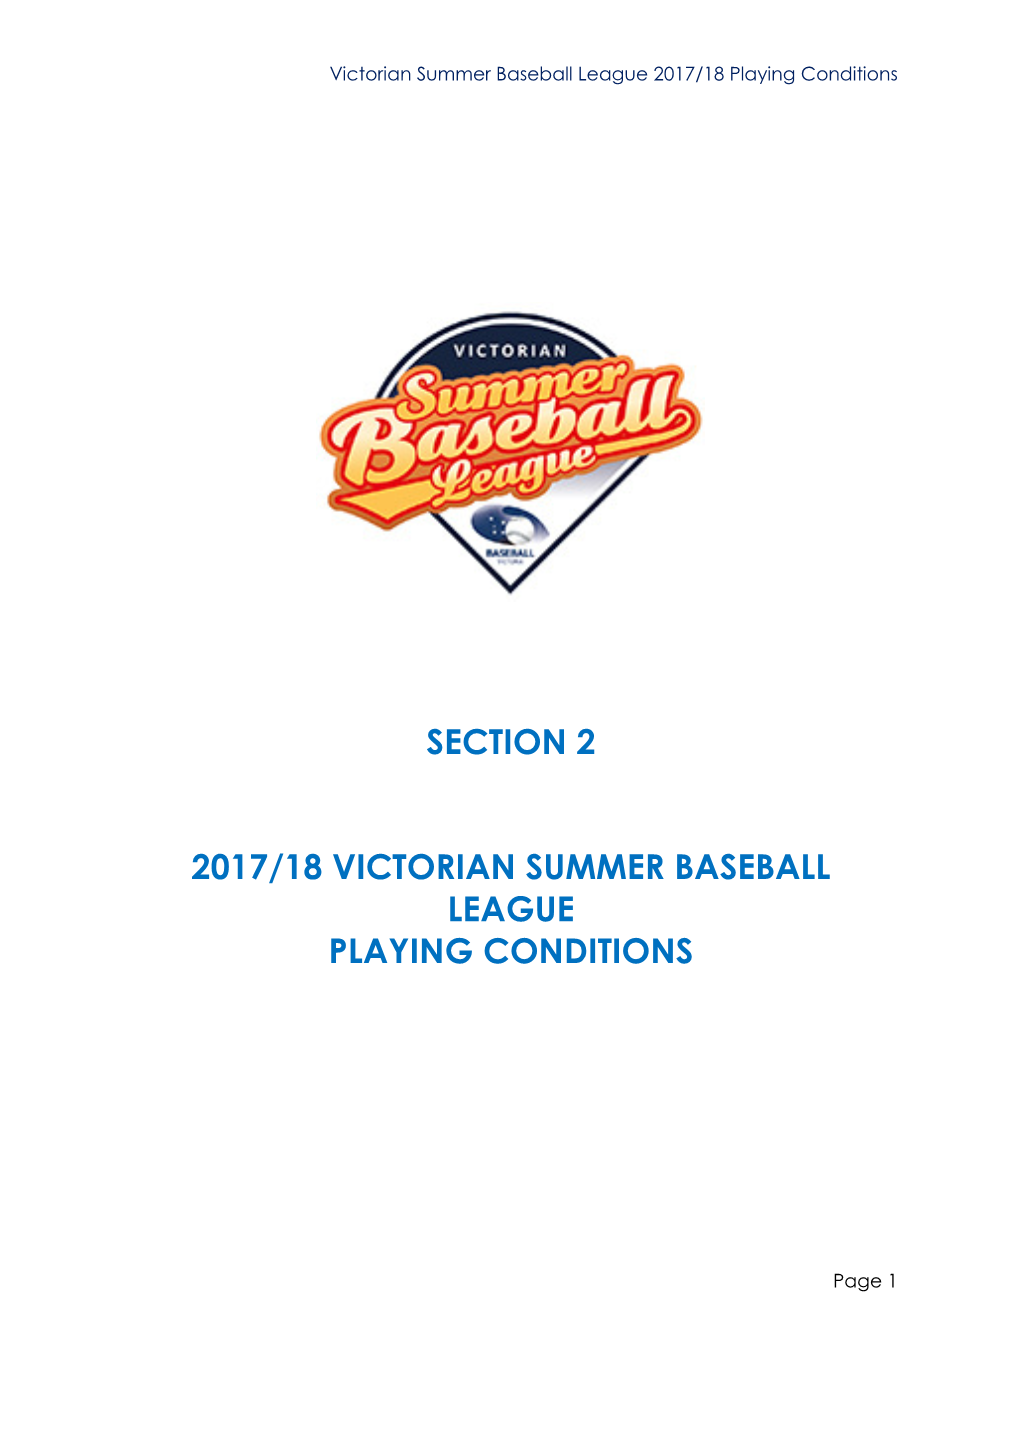 Section 2 2017/18 Victorian Summer Baseball League